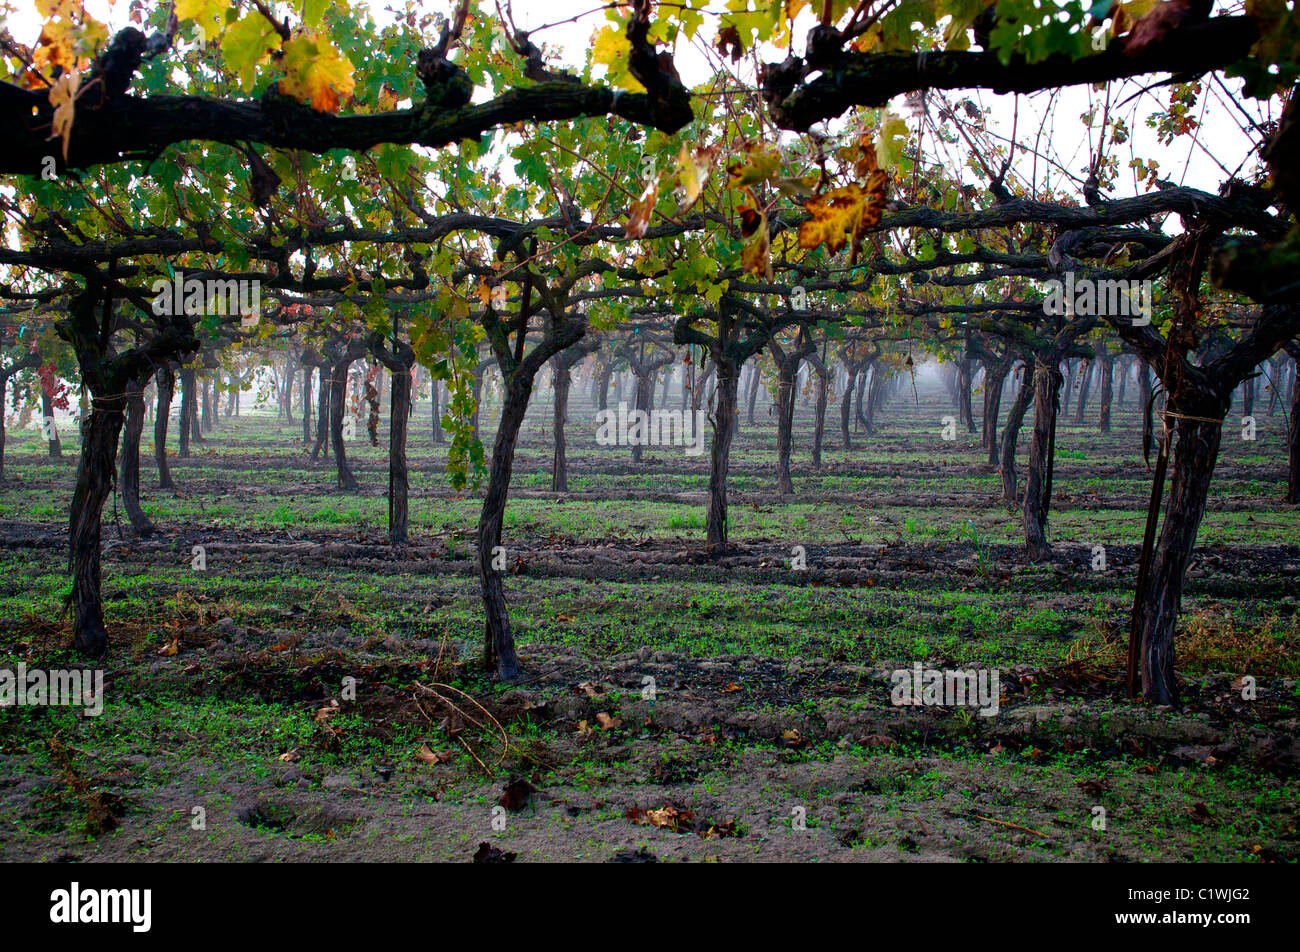 Vines in a vineyard, Lodi, California, USA Stock Photo